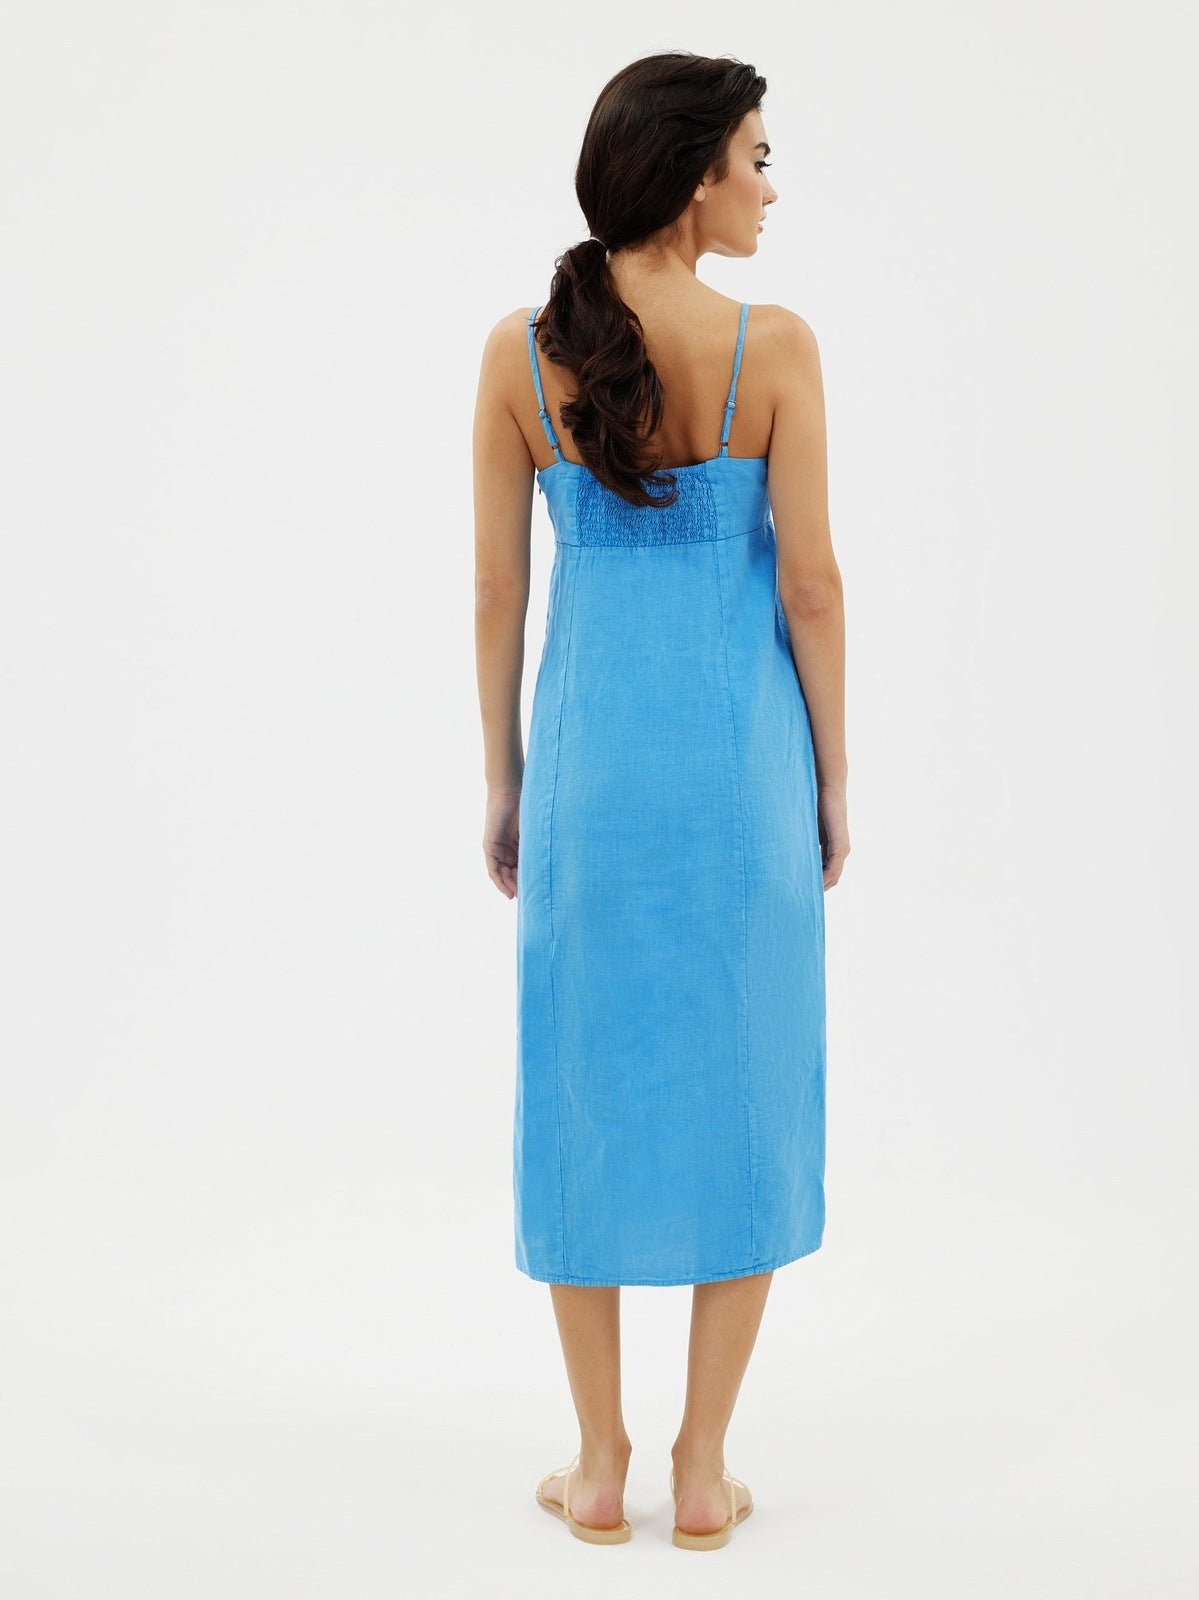 The Jeneia Organic Linen Dress